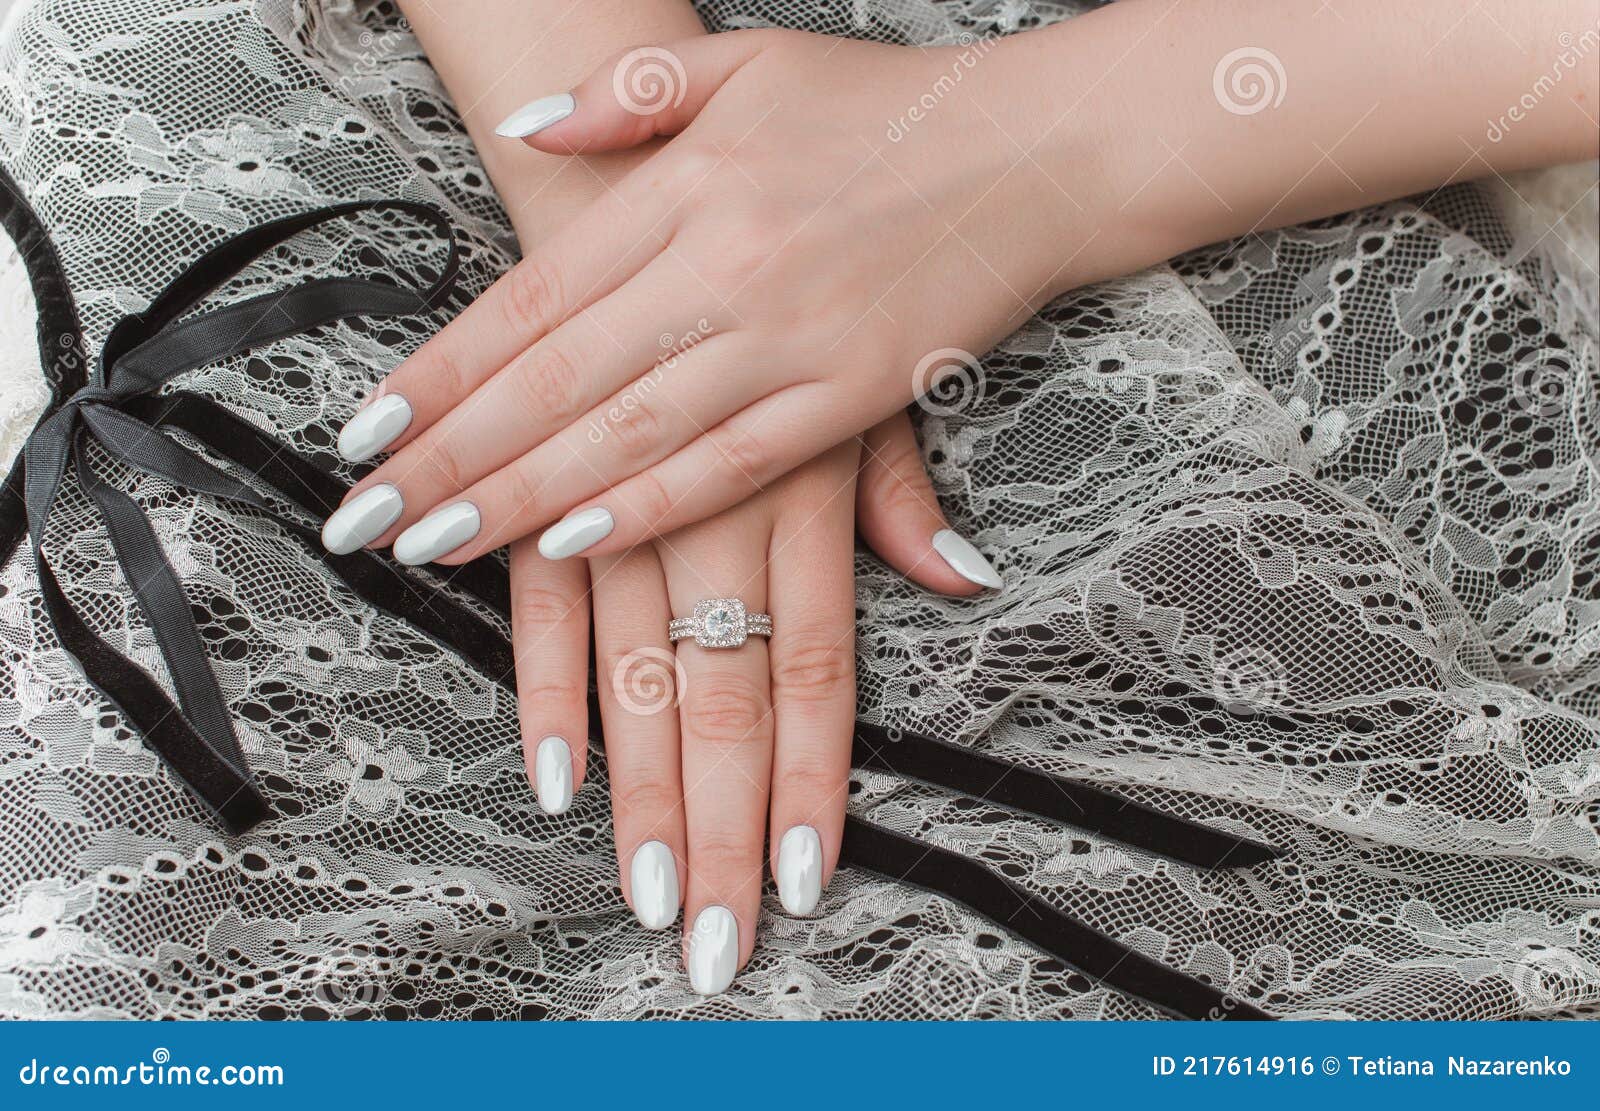 X 上的Topline Weddings：「#wedding #nails #beads #pearl #venue #church  #reception #bridal https://t.co/E7XfryL4W4」 / X